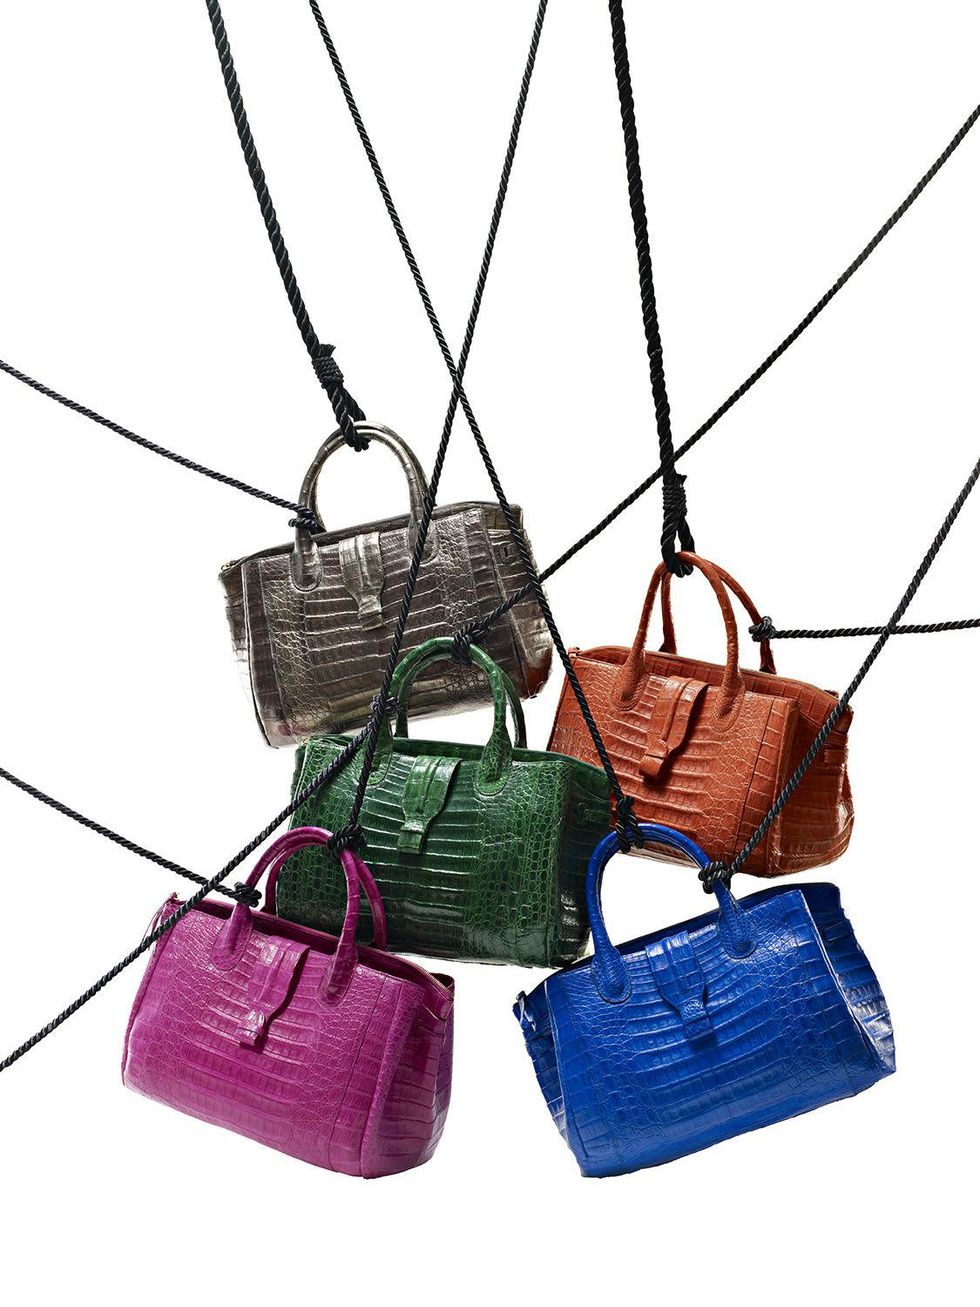 12.Handbag designer, Nancy Gonzalez - Bal Harbour Shops